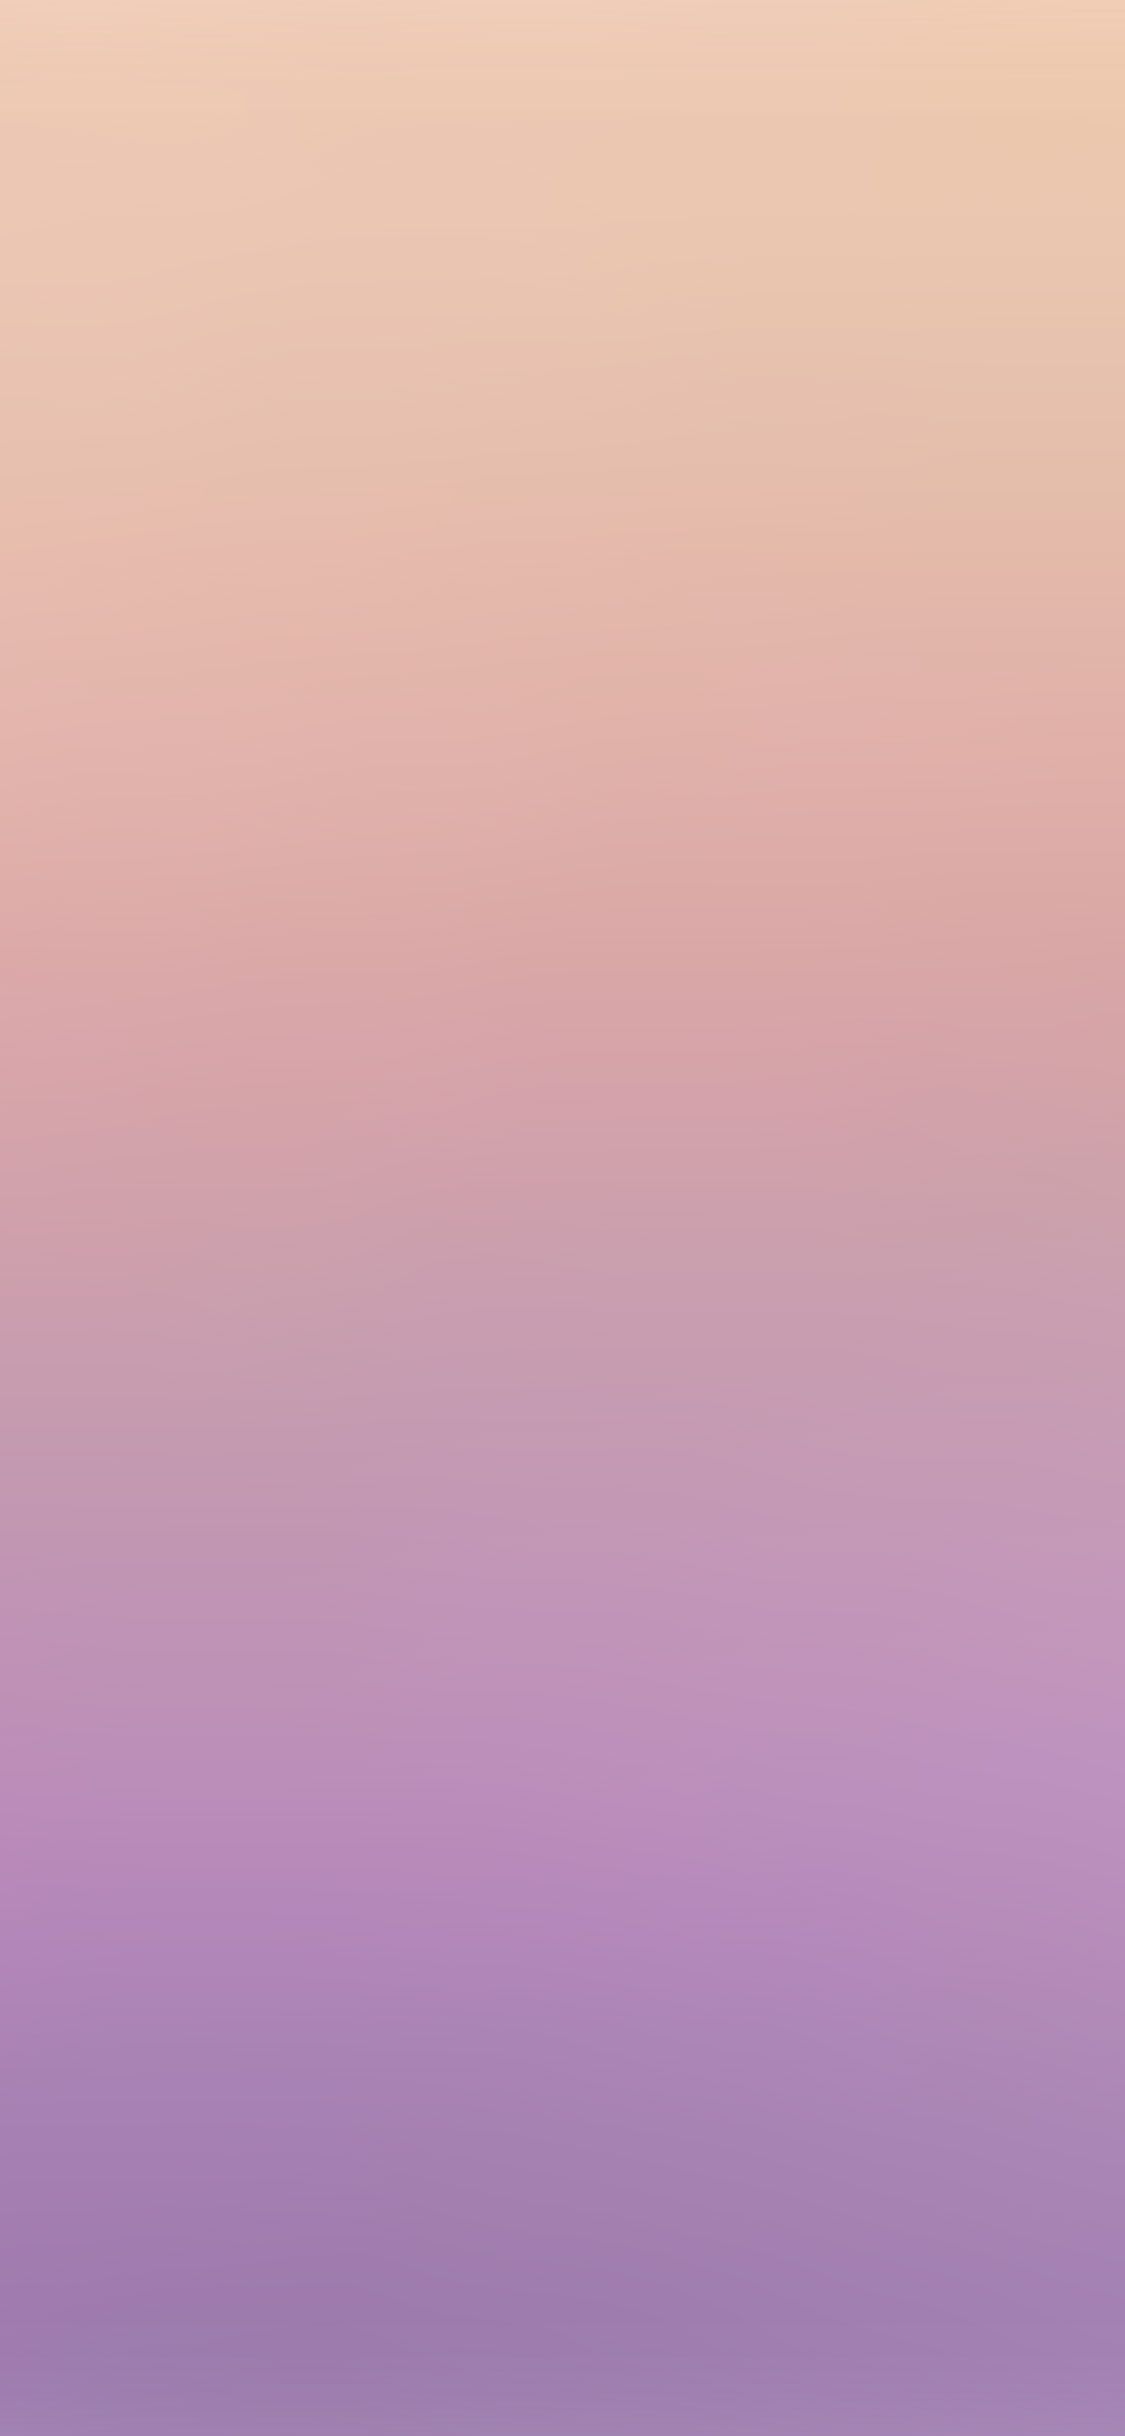 Light Pink Background Iphone X gambar ke 15